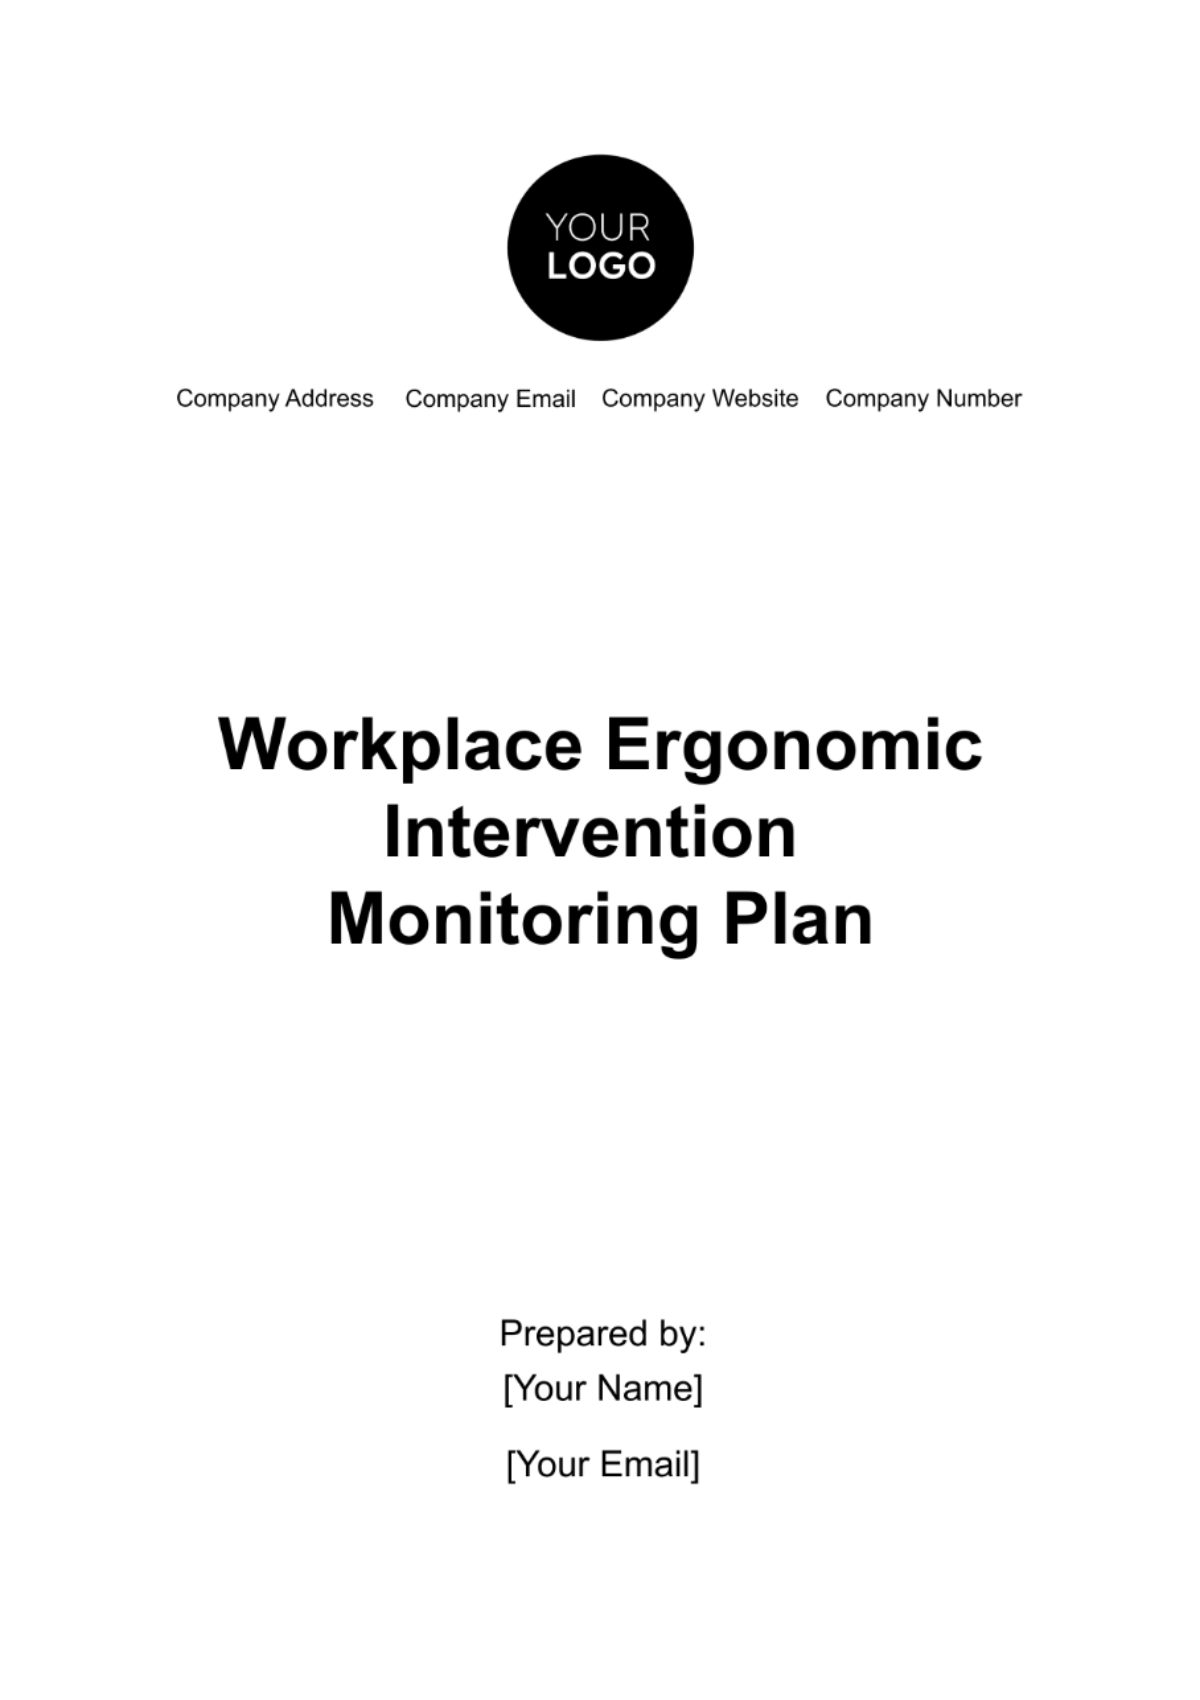 Workplace Ergonomic Intervention Monitoring Plan Template